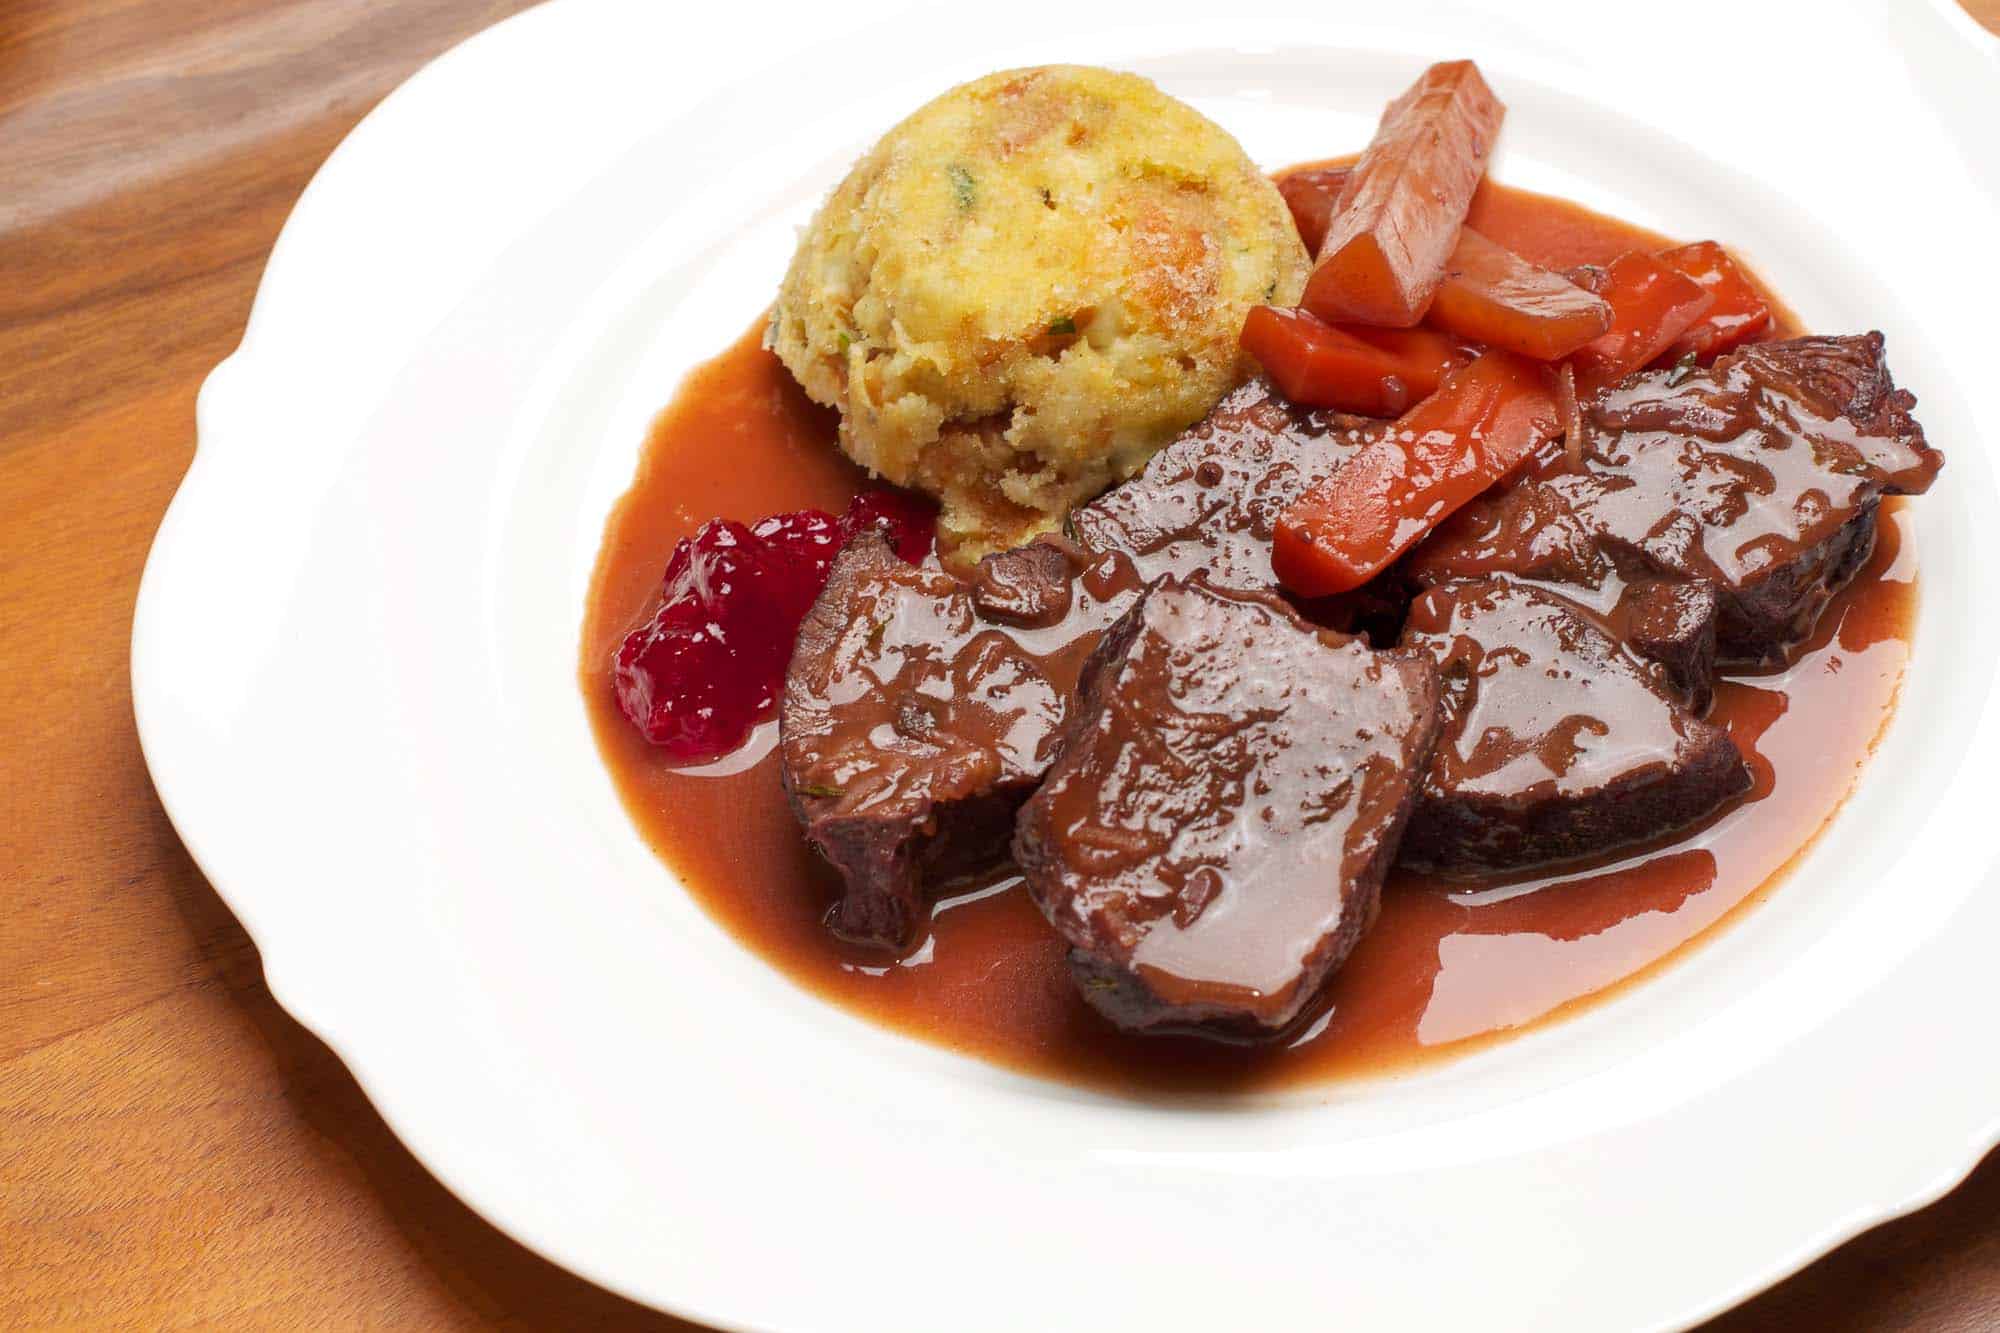 Roast venison recipe picture with dumplings as souffle, braised carrots, gravy and cranberries.